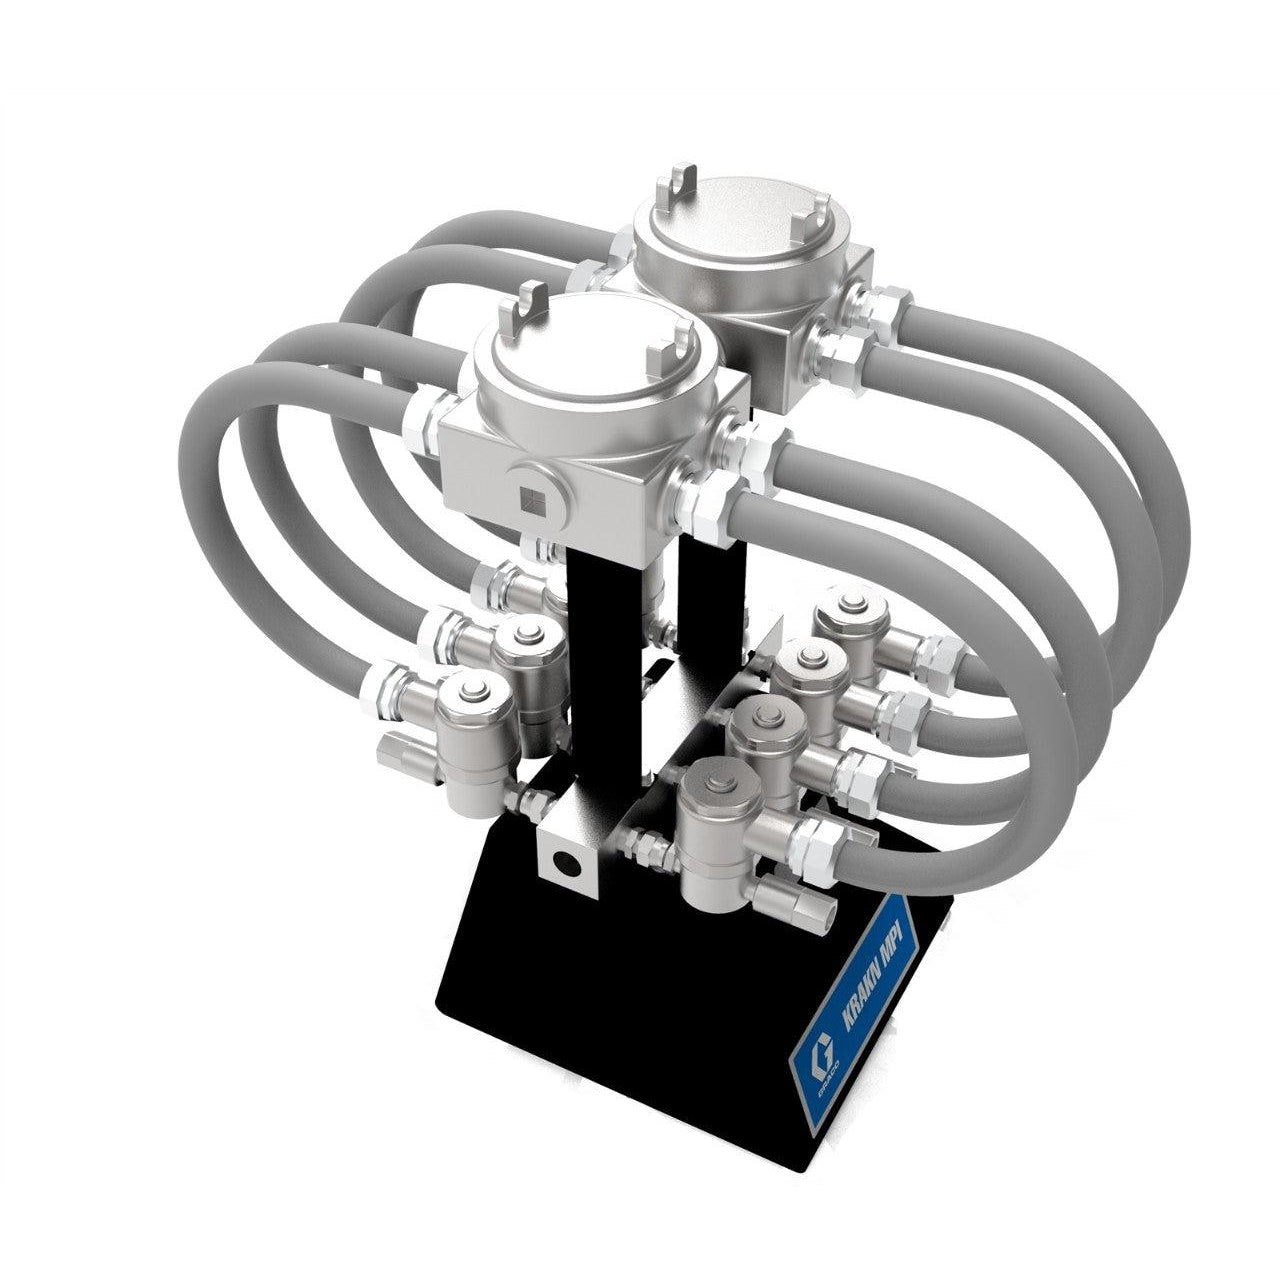 8 valve KRAKN MPI fluid manifold assembly for General Purpose use